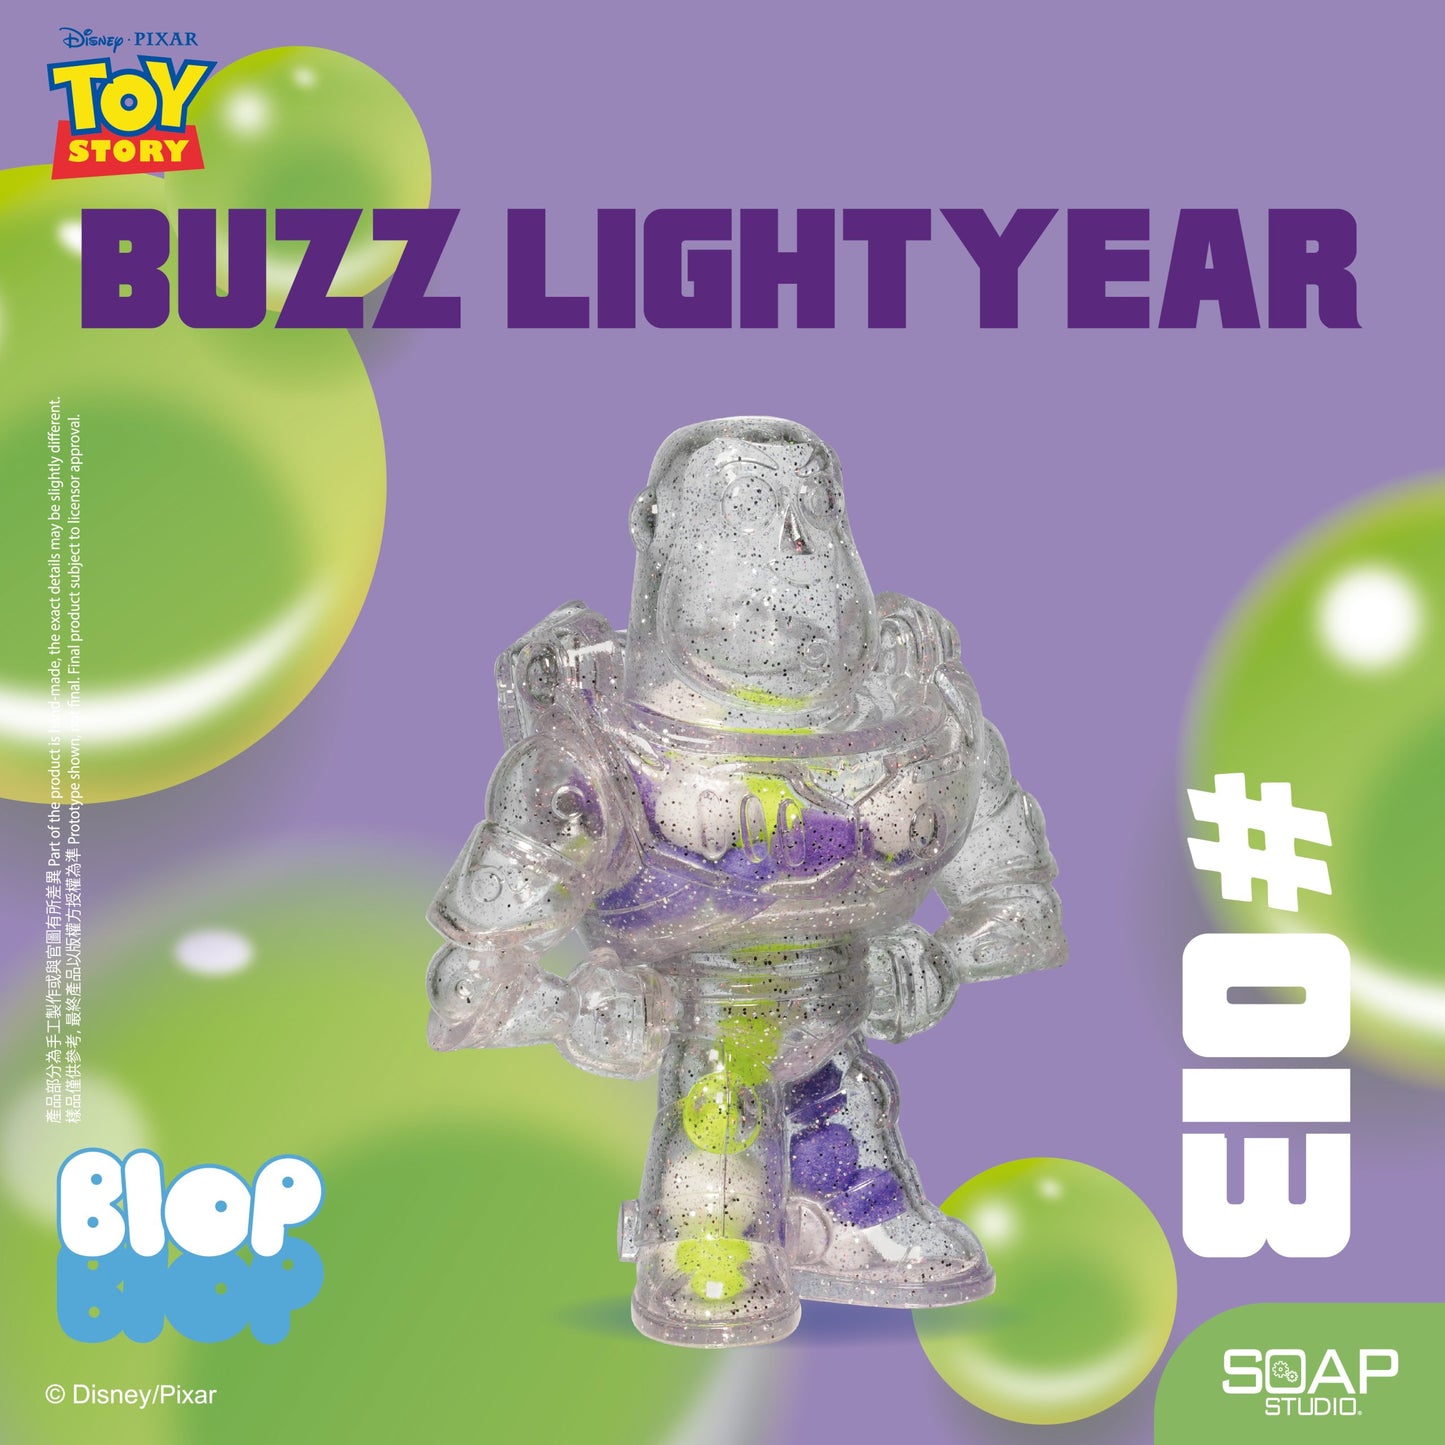 Disney Pixar Buzz Light Year Blop Blop Series Figure 迪士尼彼思巴斯光年款 Blop Blop 系列人偶 (此價格不含運費)